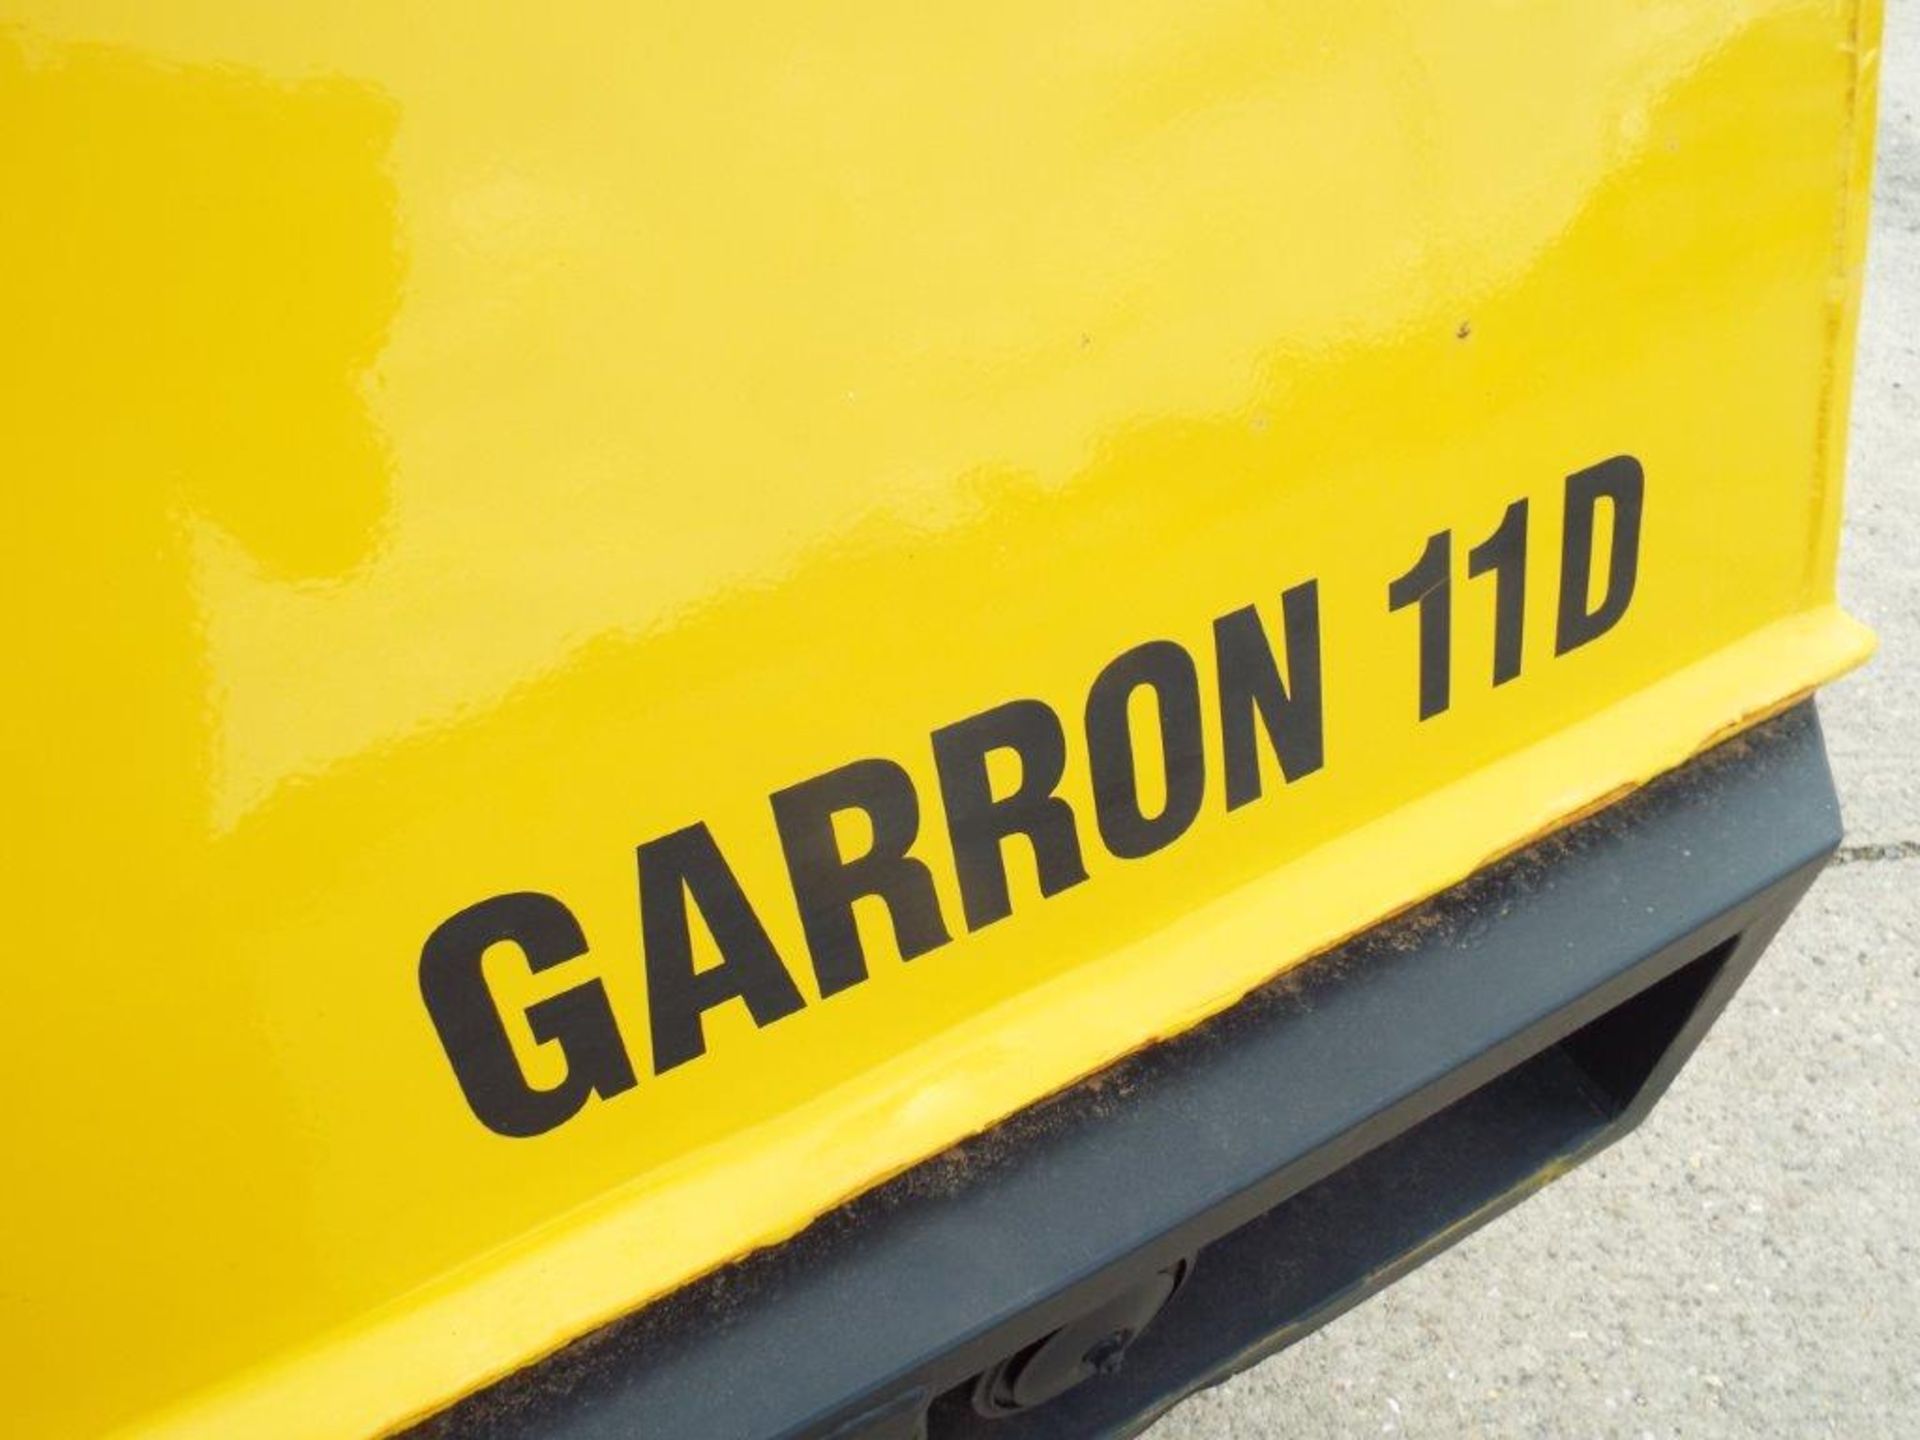 Garron 11D All Terrain Tracked Vehicle - Image 21 of 22